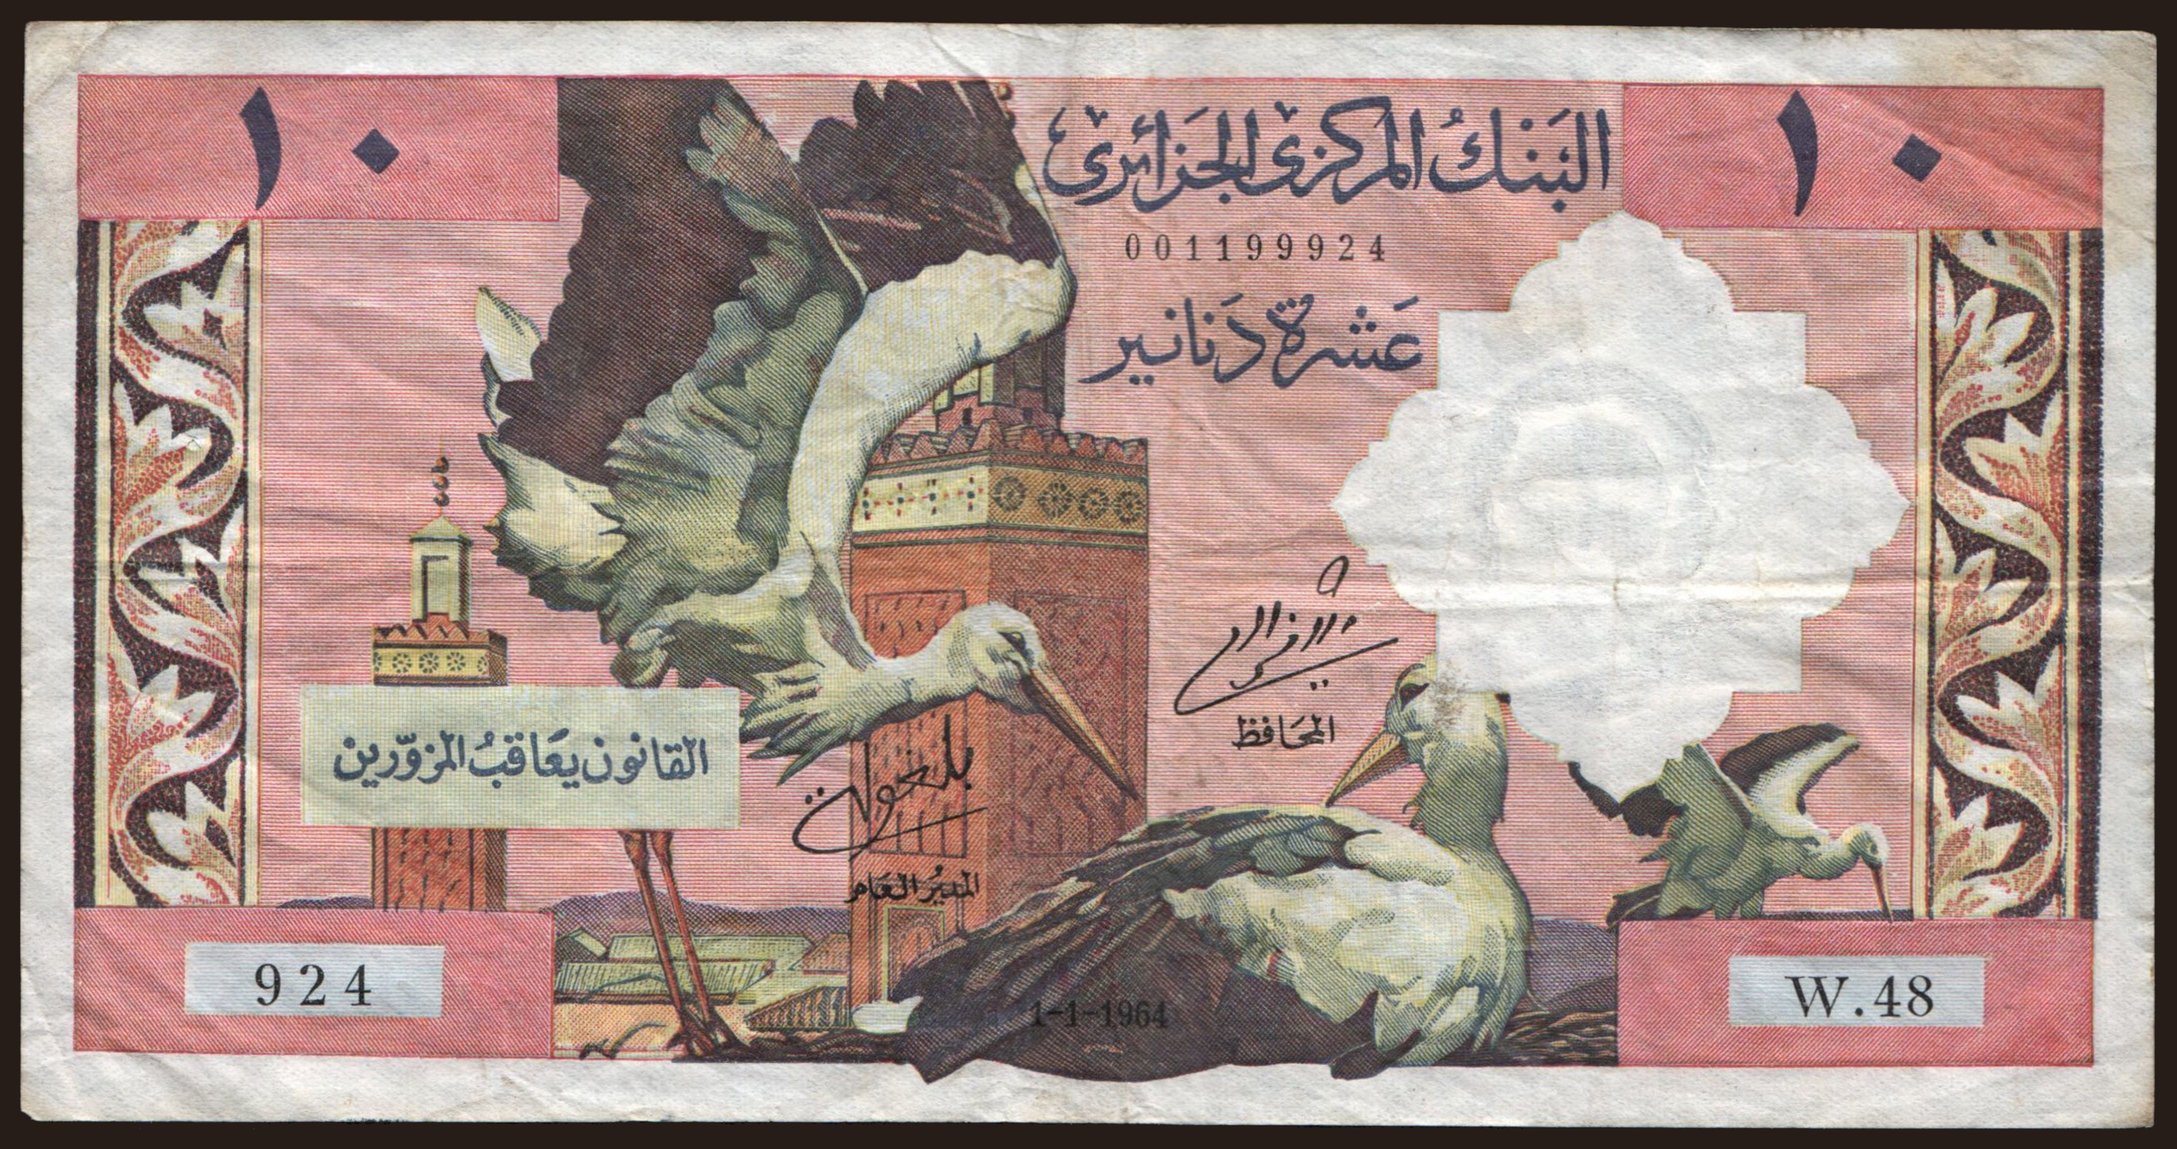 10 dinars, 1964